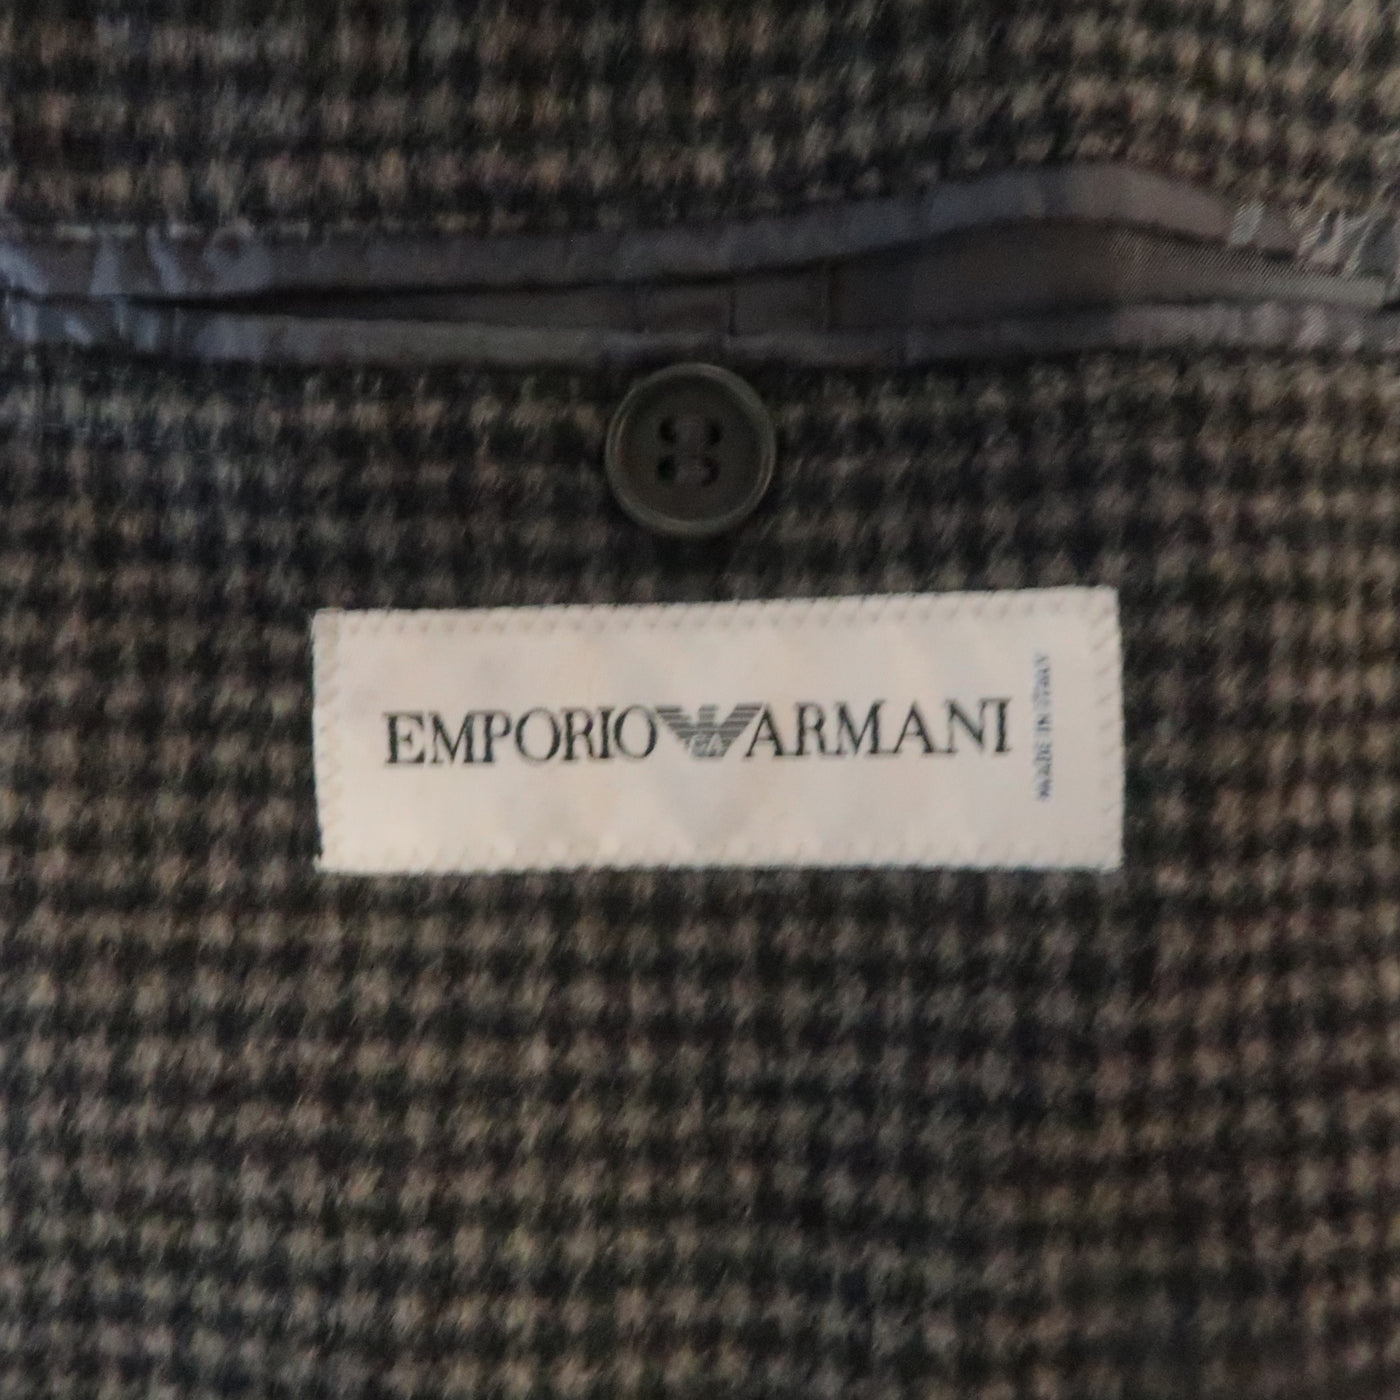 EMPORIO ARMANI 40 Black & Taupe Plaid Wool & Leather Notch Lapel  Sport Coat